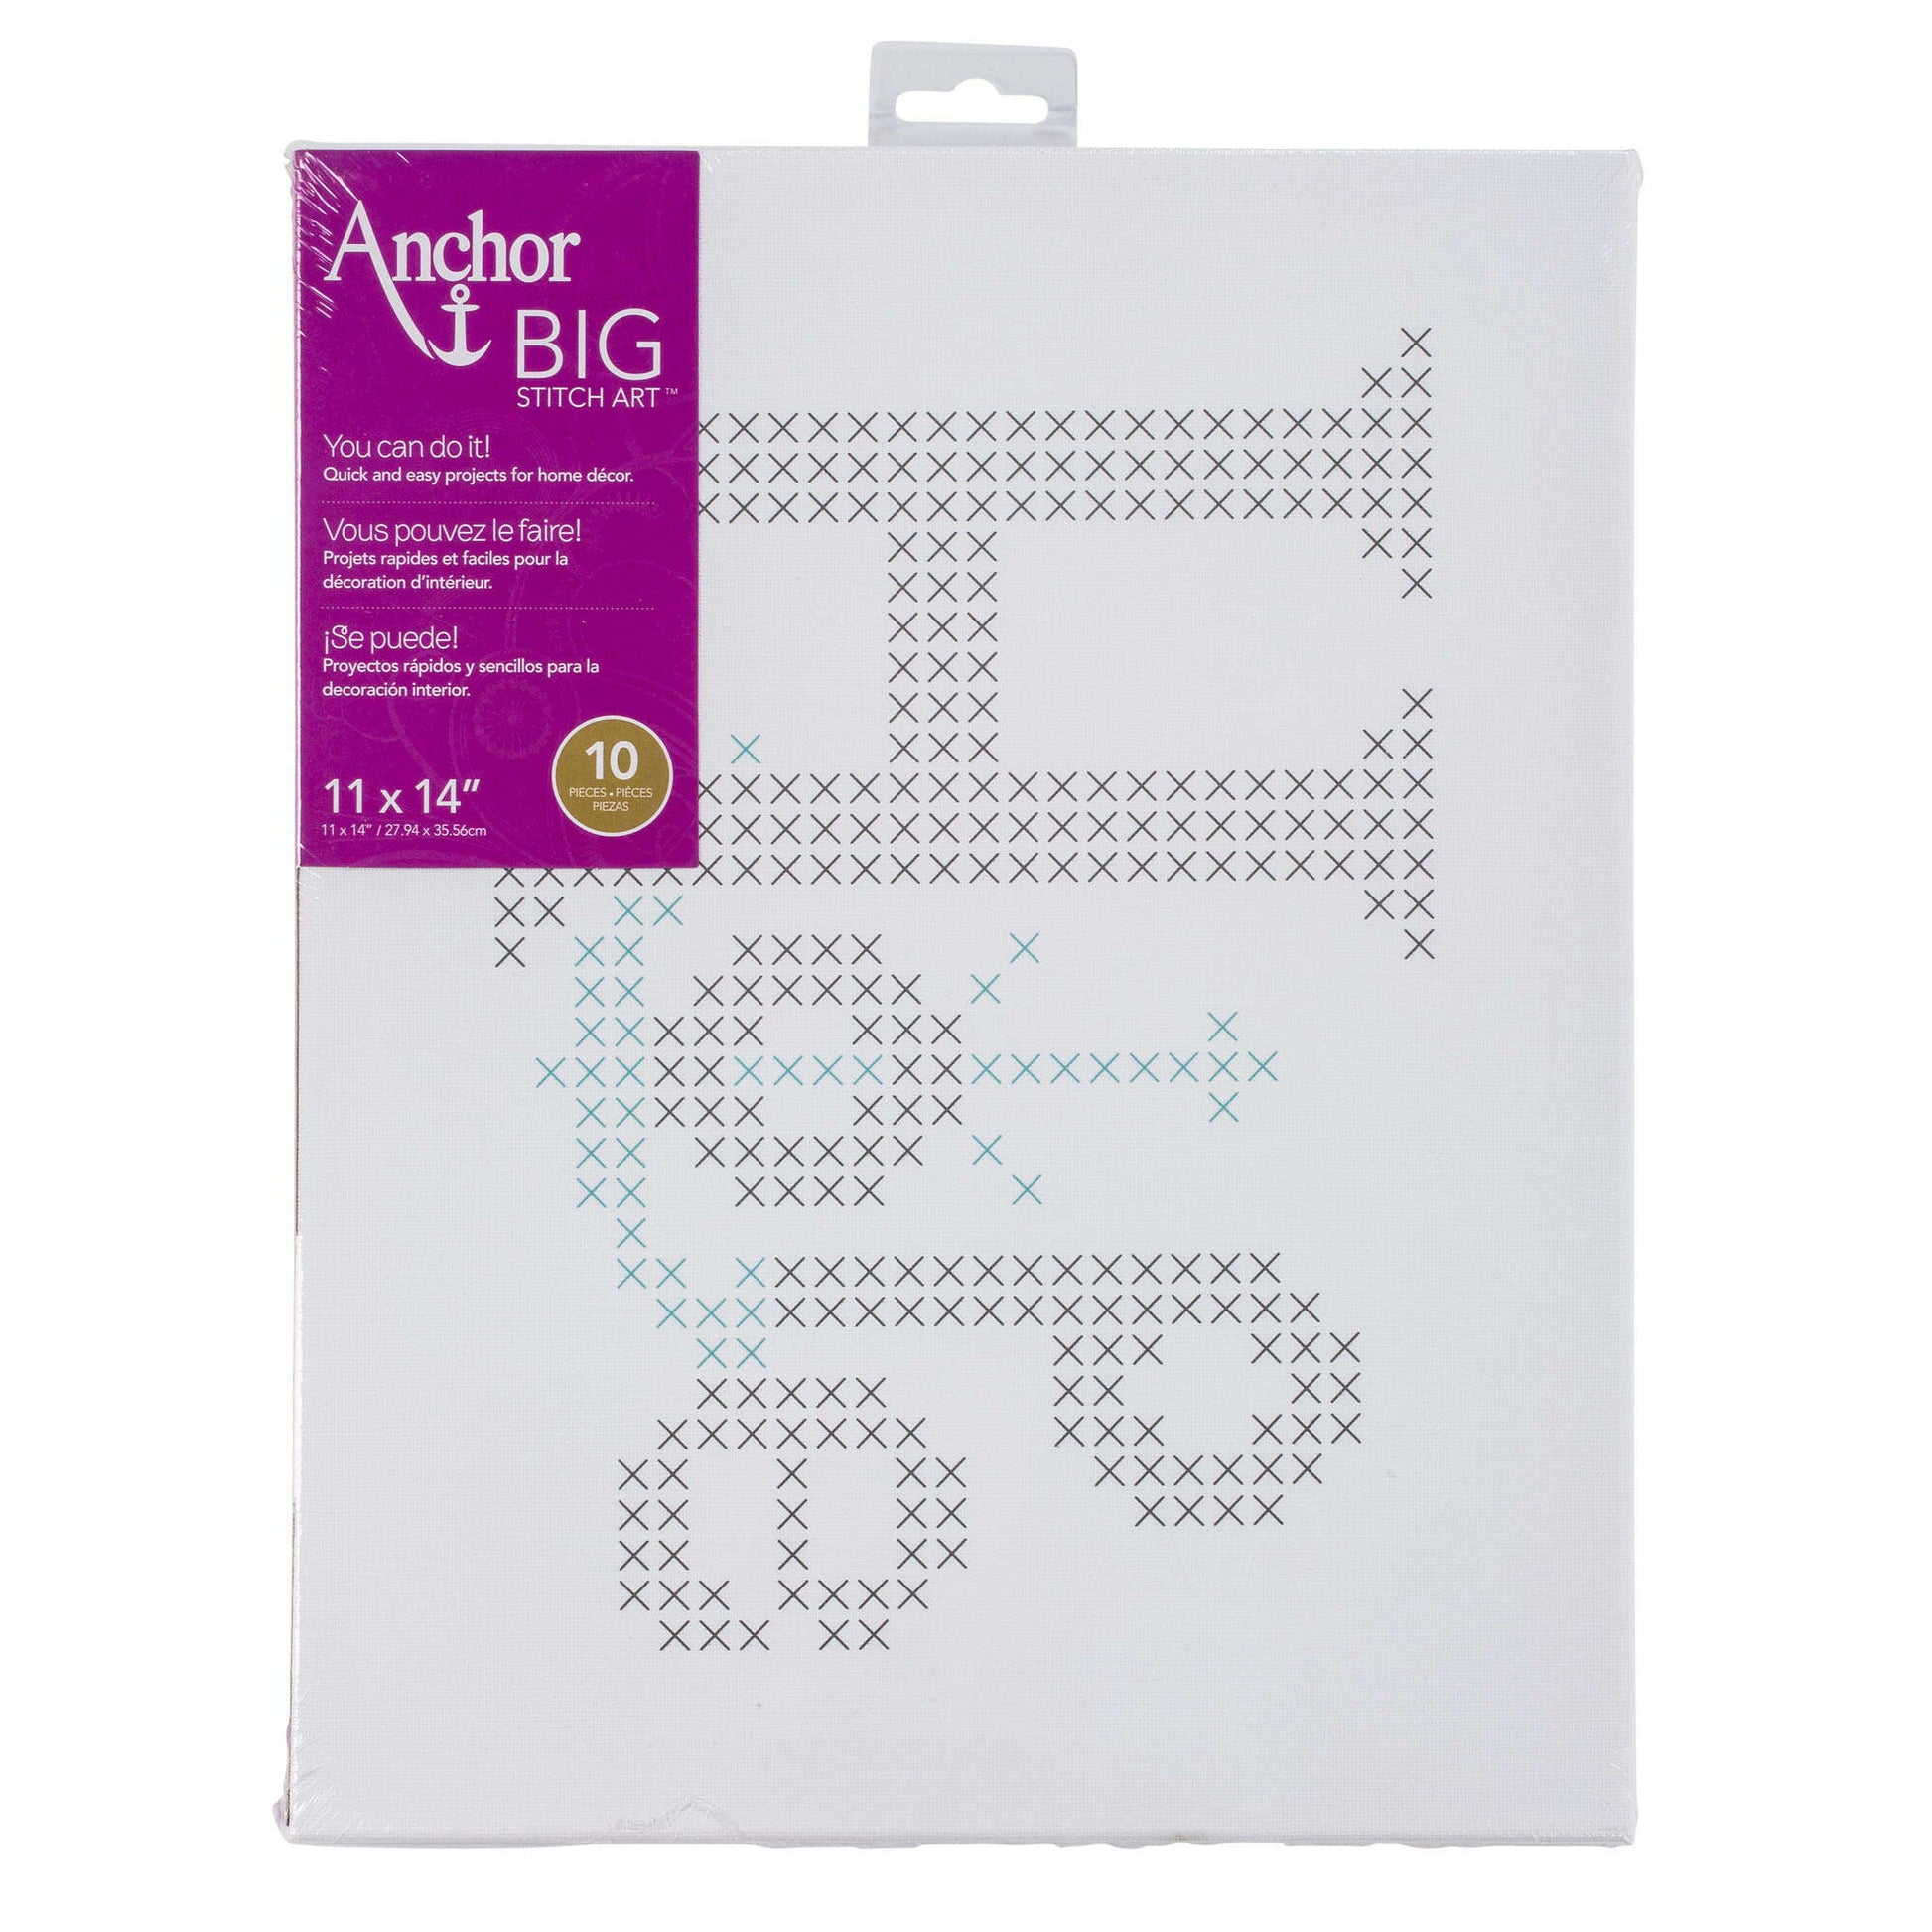 Anchor Big Stitch Art 11" x 14" - Discontinued Items